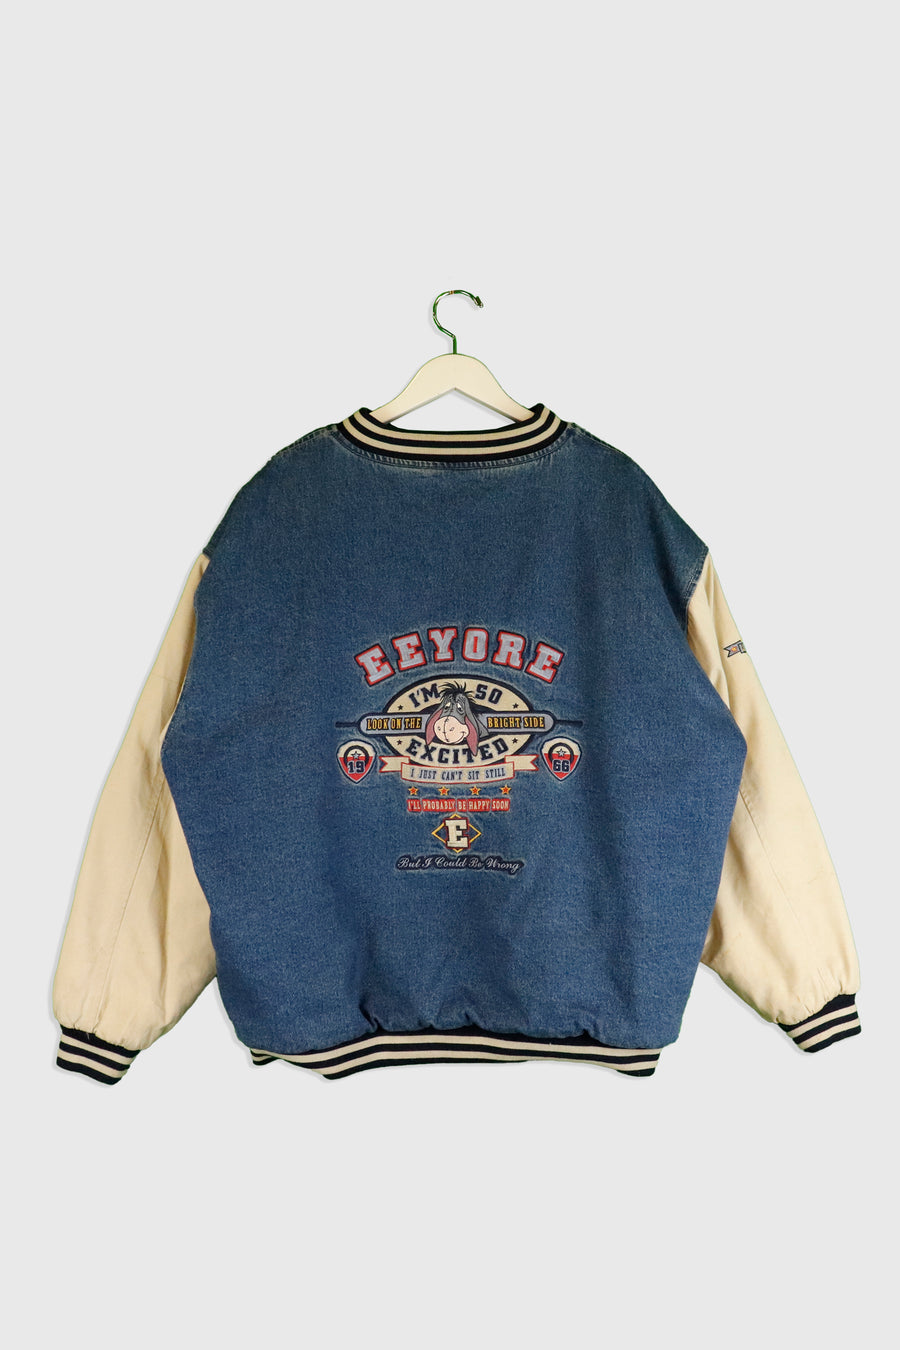 Vintage Disney Eyore Things Could Be Worse Colour Block Jacket Sz XL